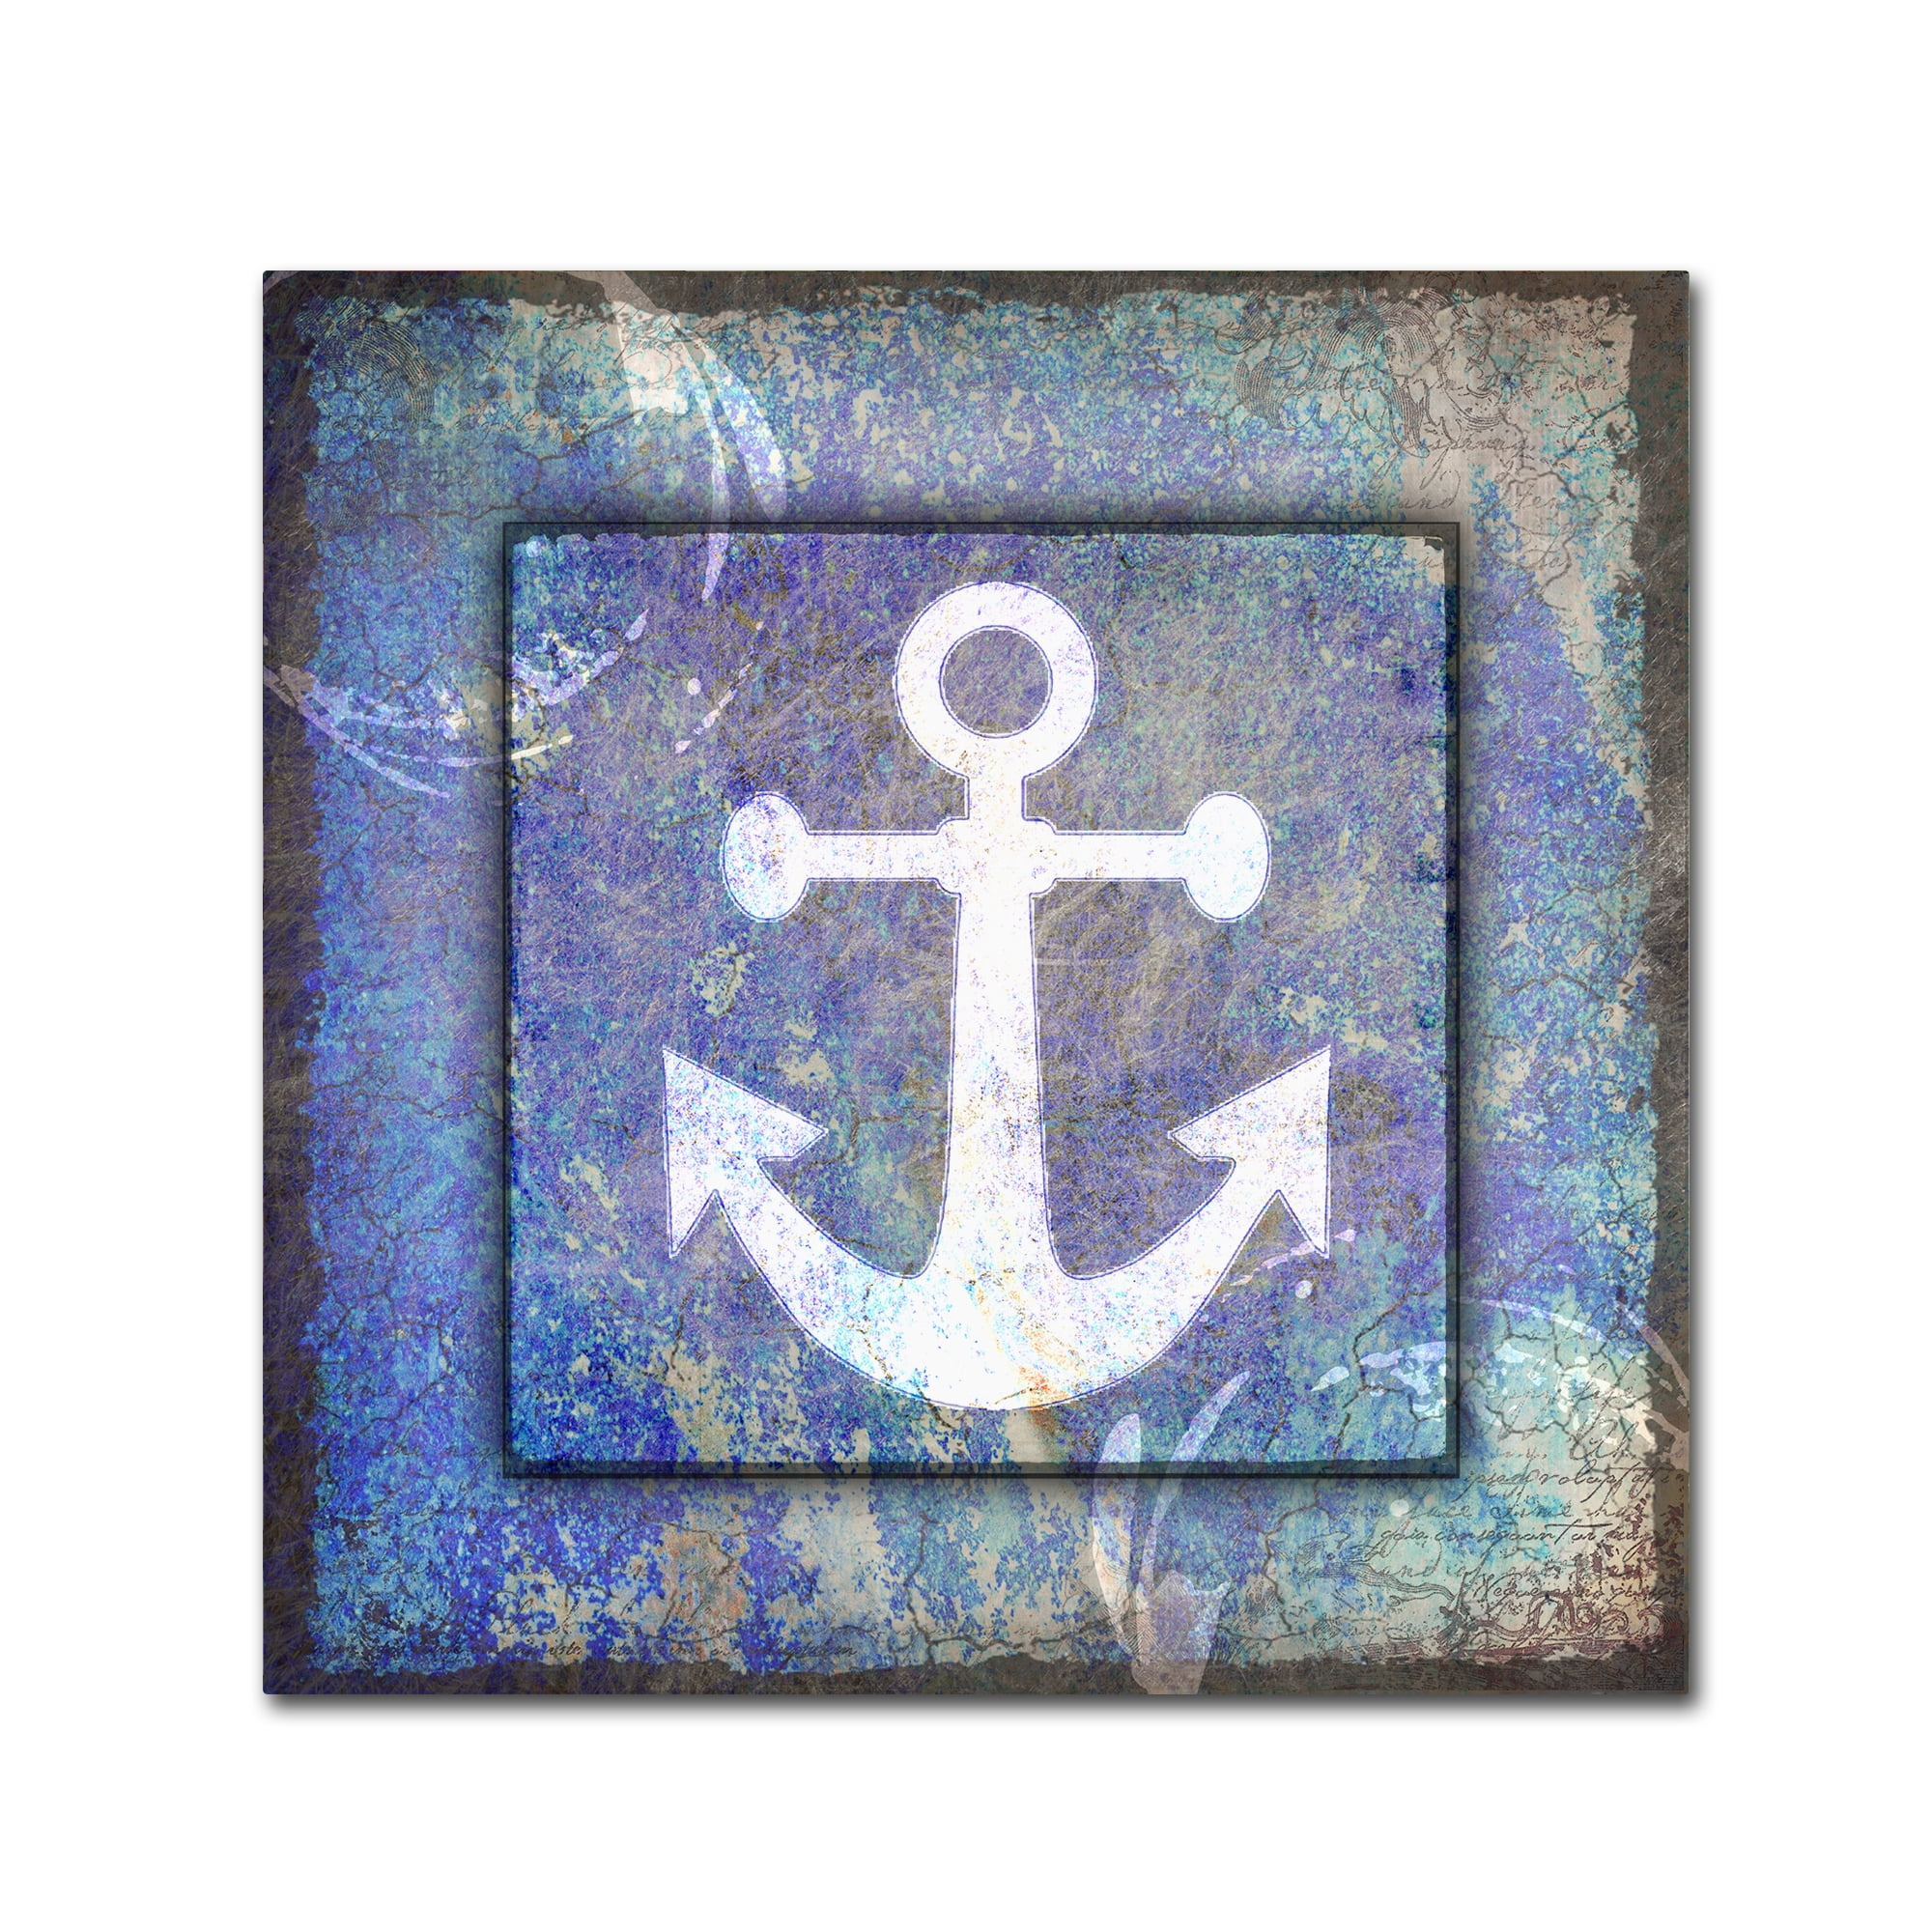 Anchored in Faith  Nautical anchor art, Anchor art, Anchor painting